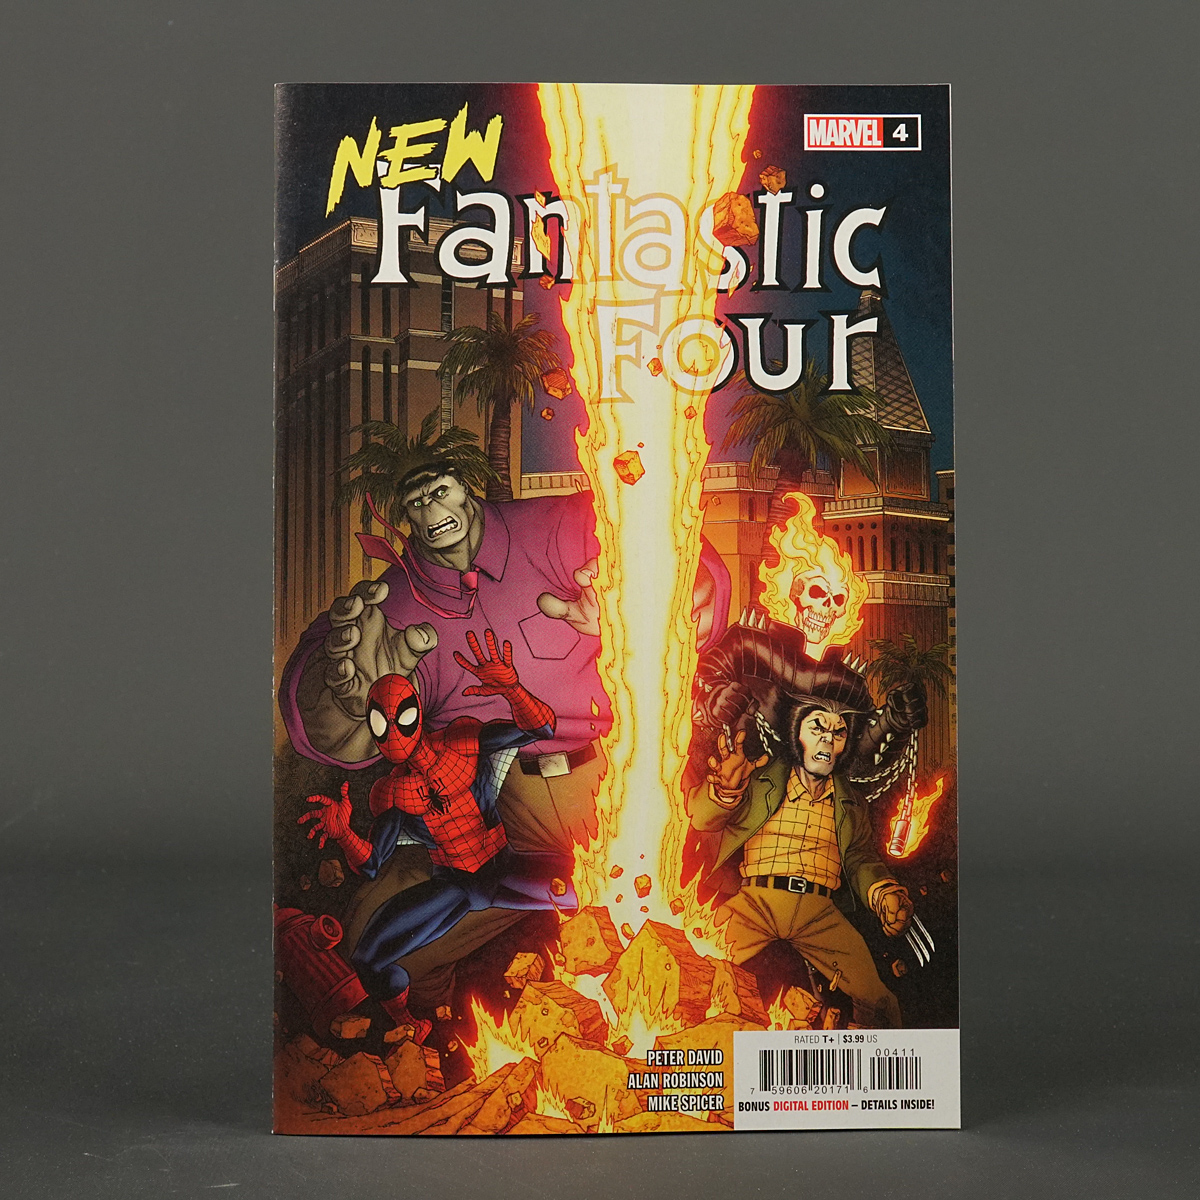 NEW FANTASTIC FOUR #4 Marvel Comics 2022 JUL220859 (CA) Bradshaw (W) David (A) Robinson